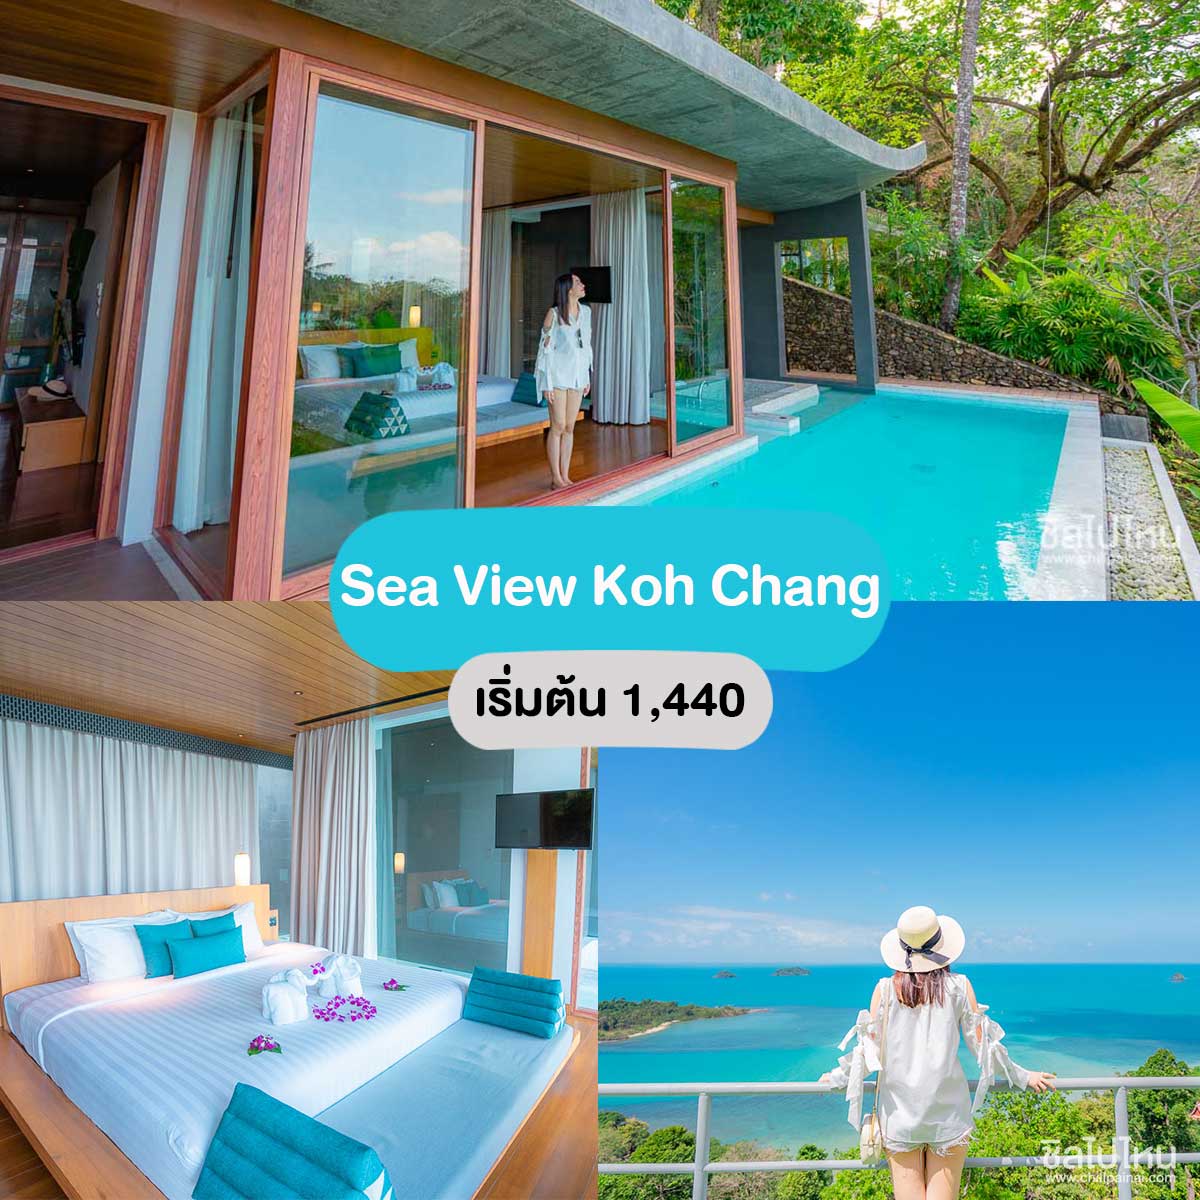 Sea View Koh Chang